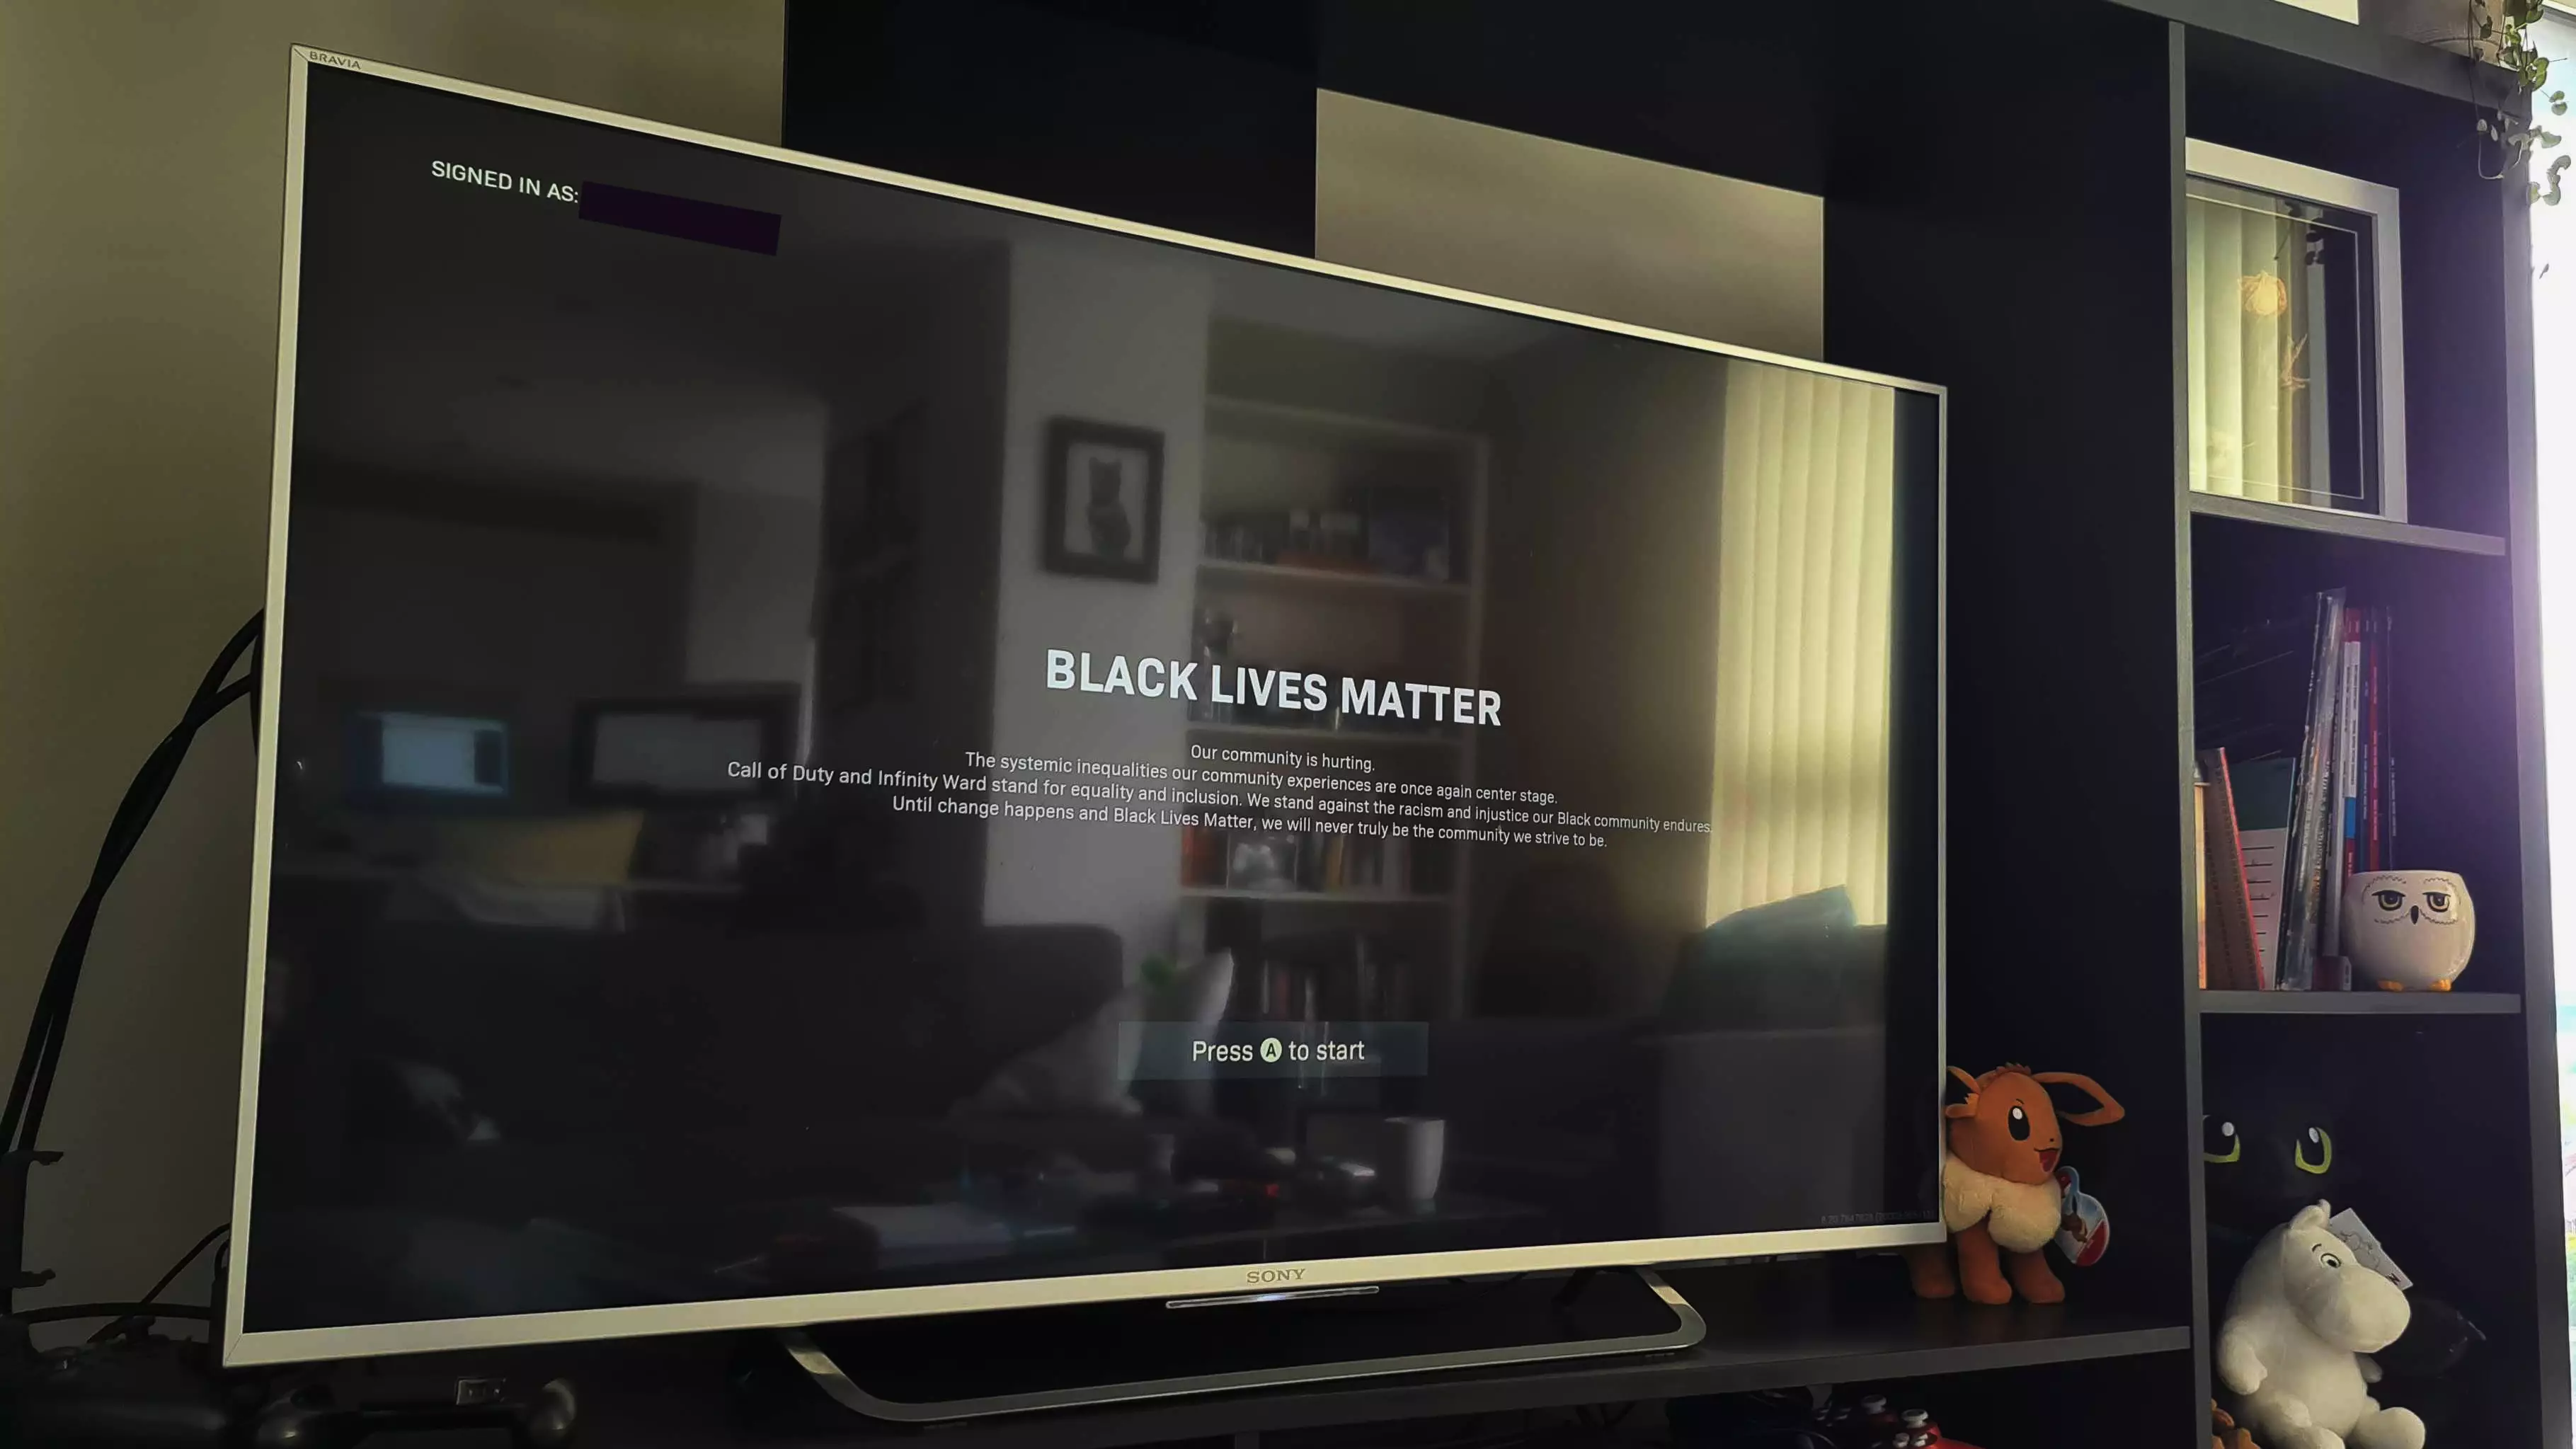 Call of Duty's Black Lives Matter screen /